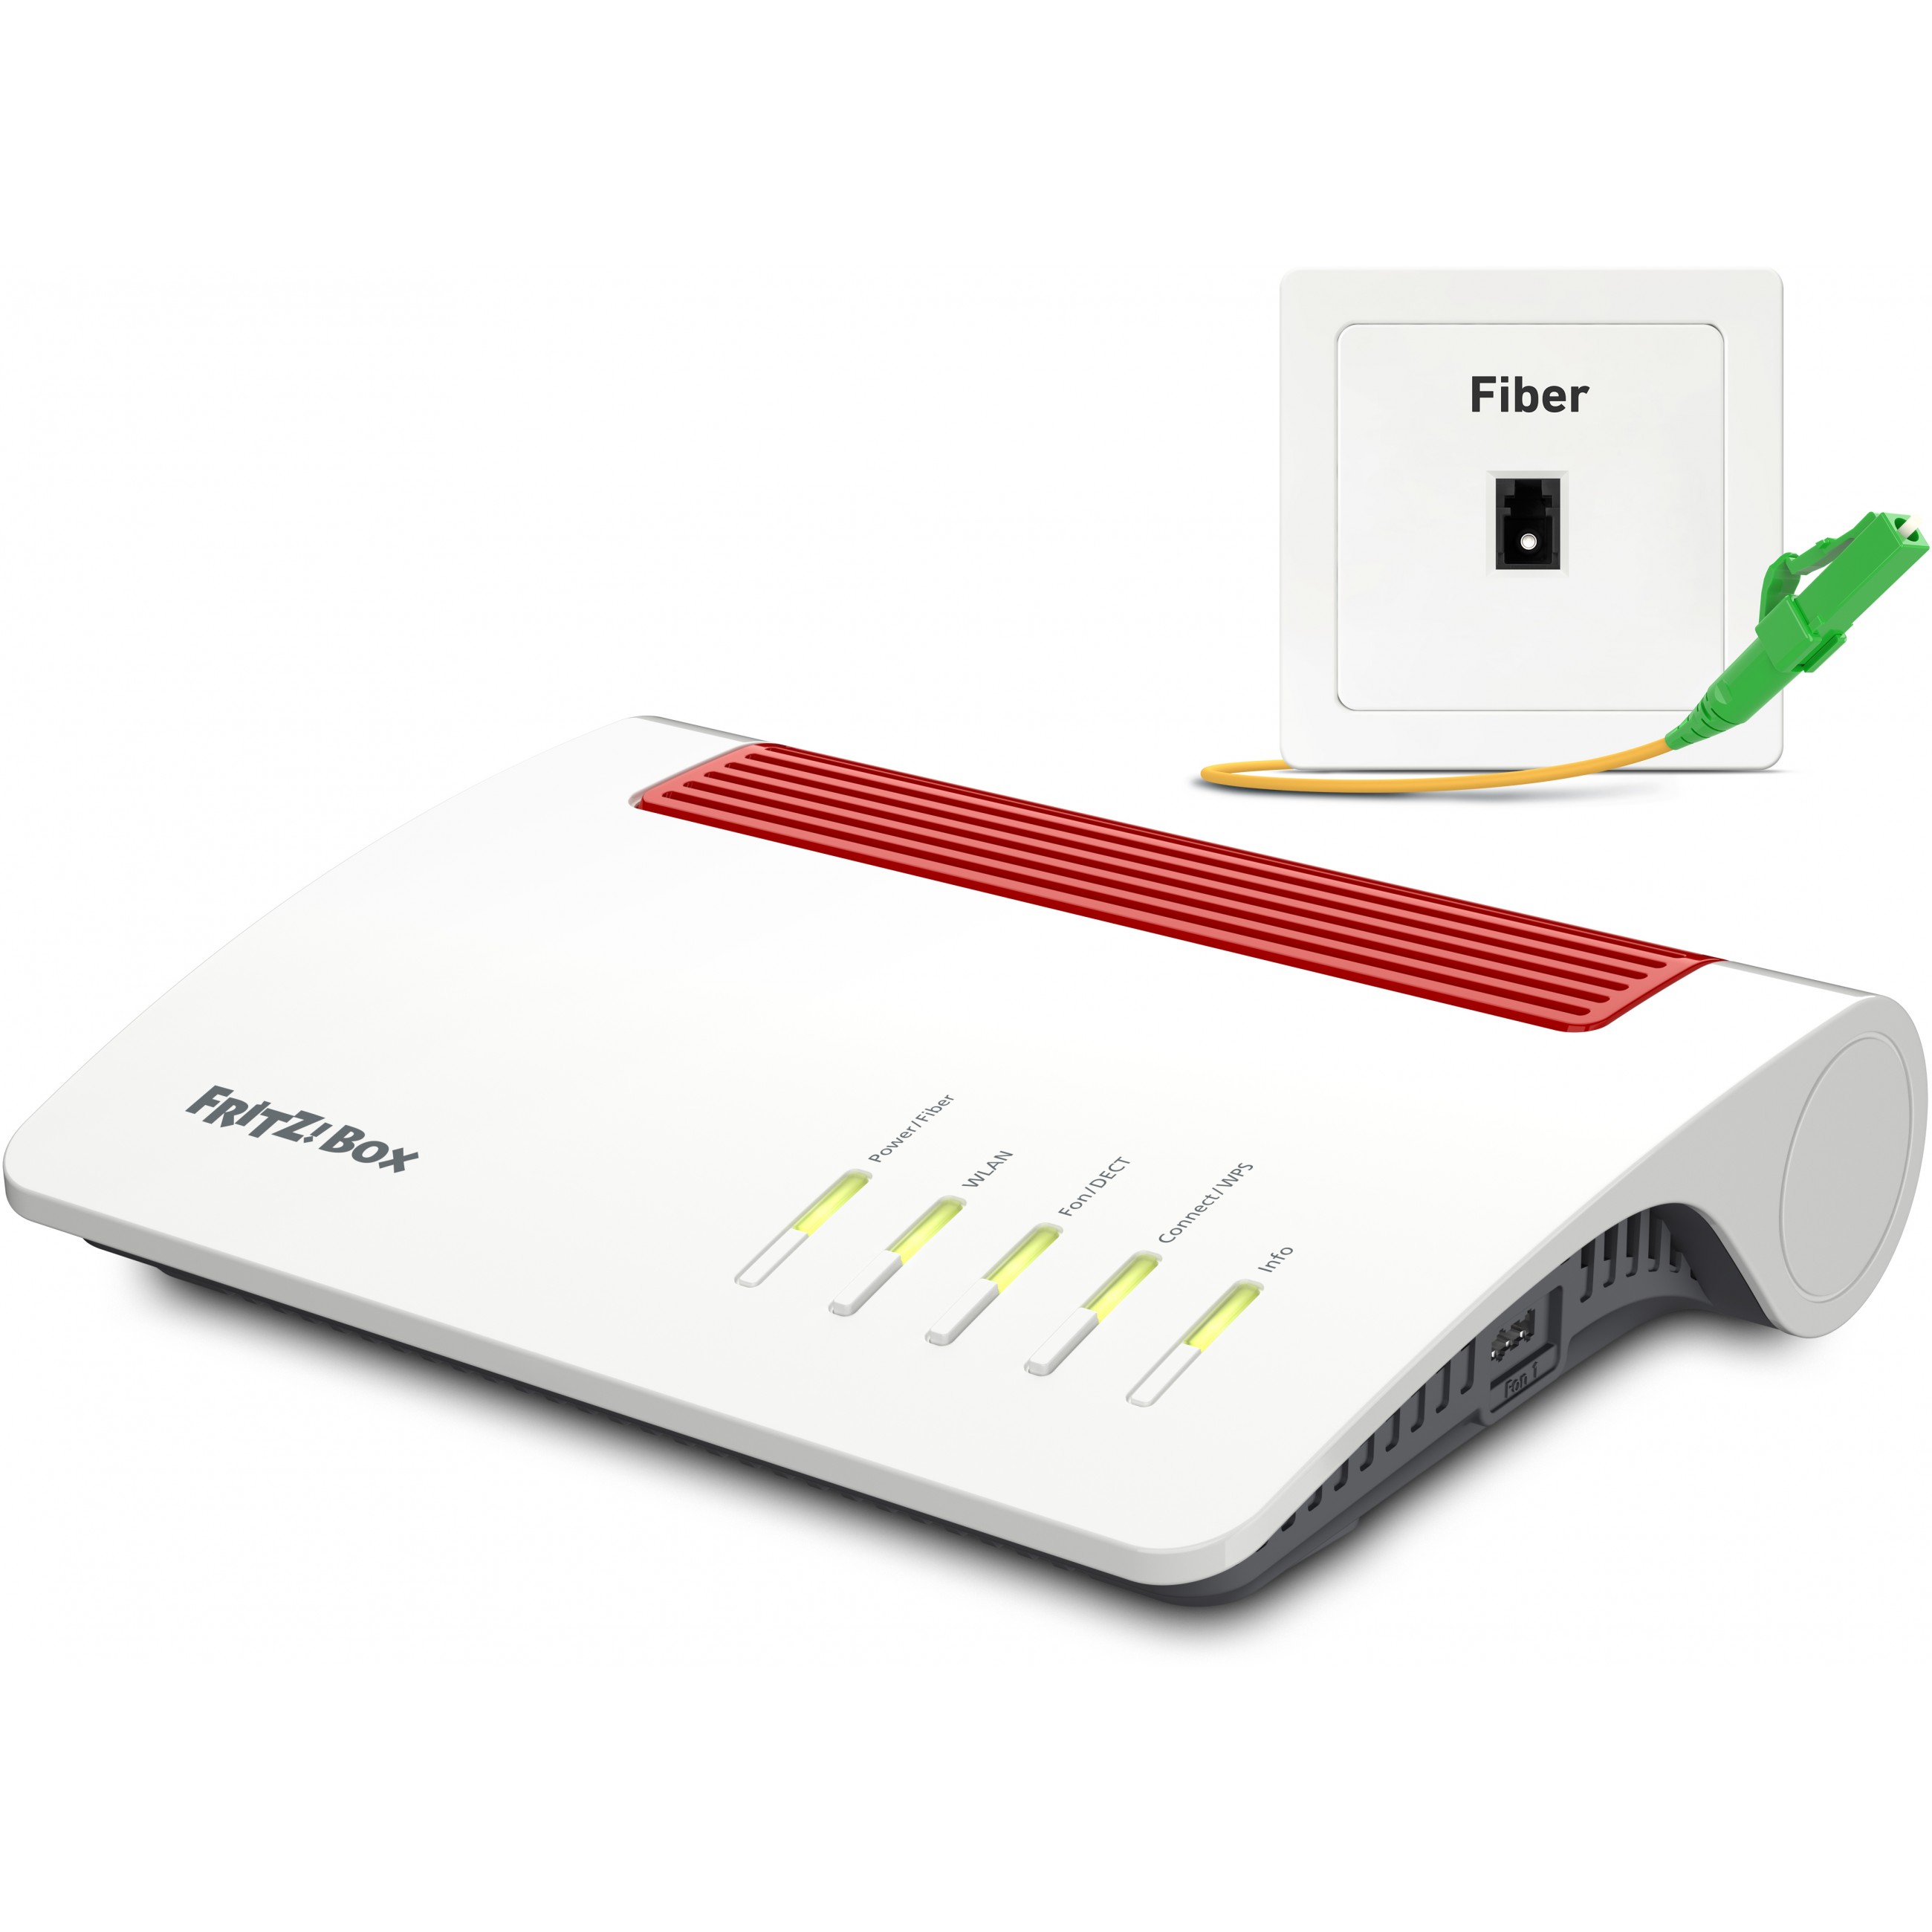 FRITZ!Box 5590 Fiber wireless router